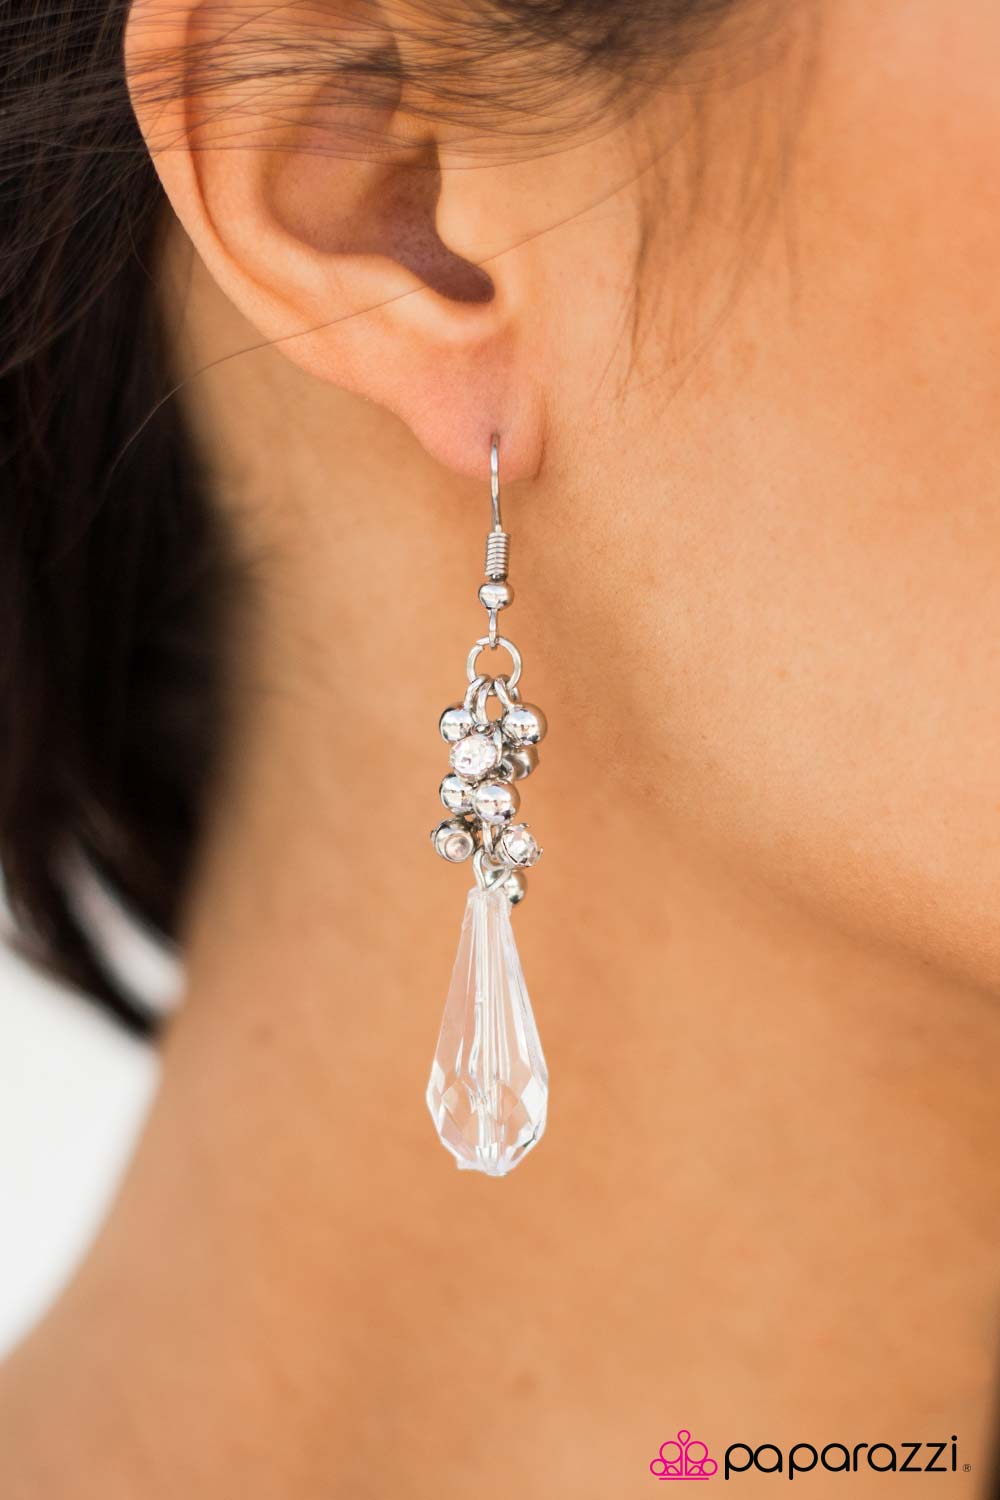 The Crystal Ball - Paparazzi earrings